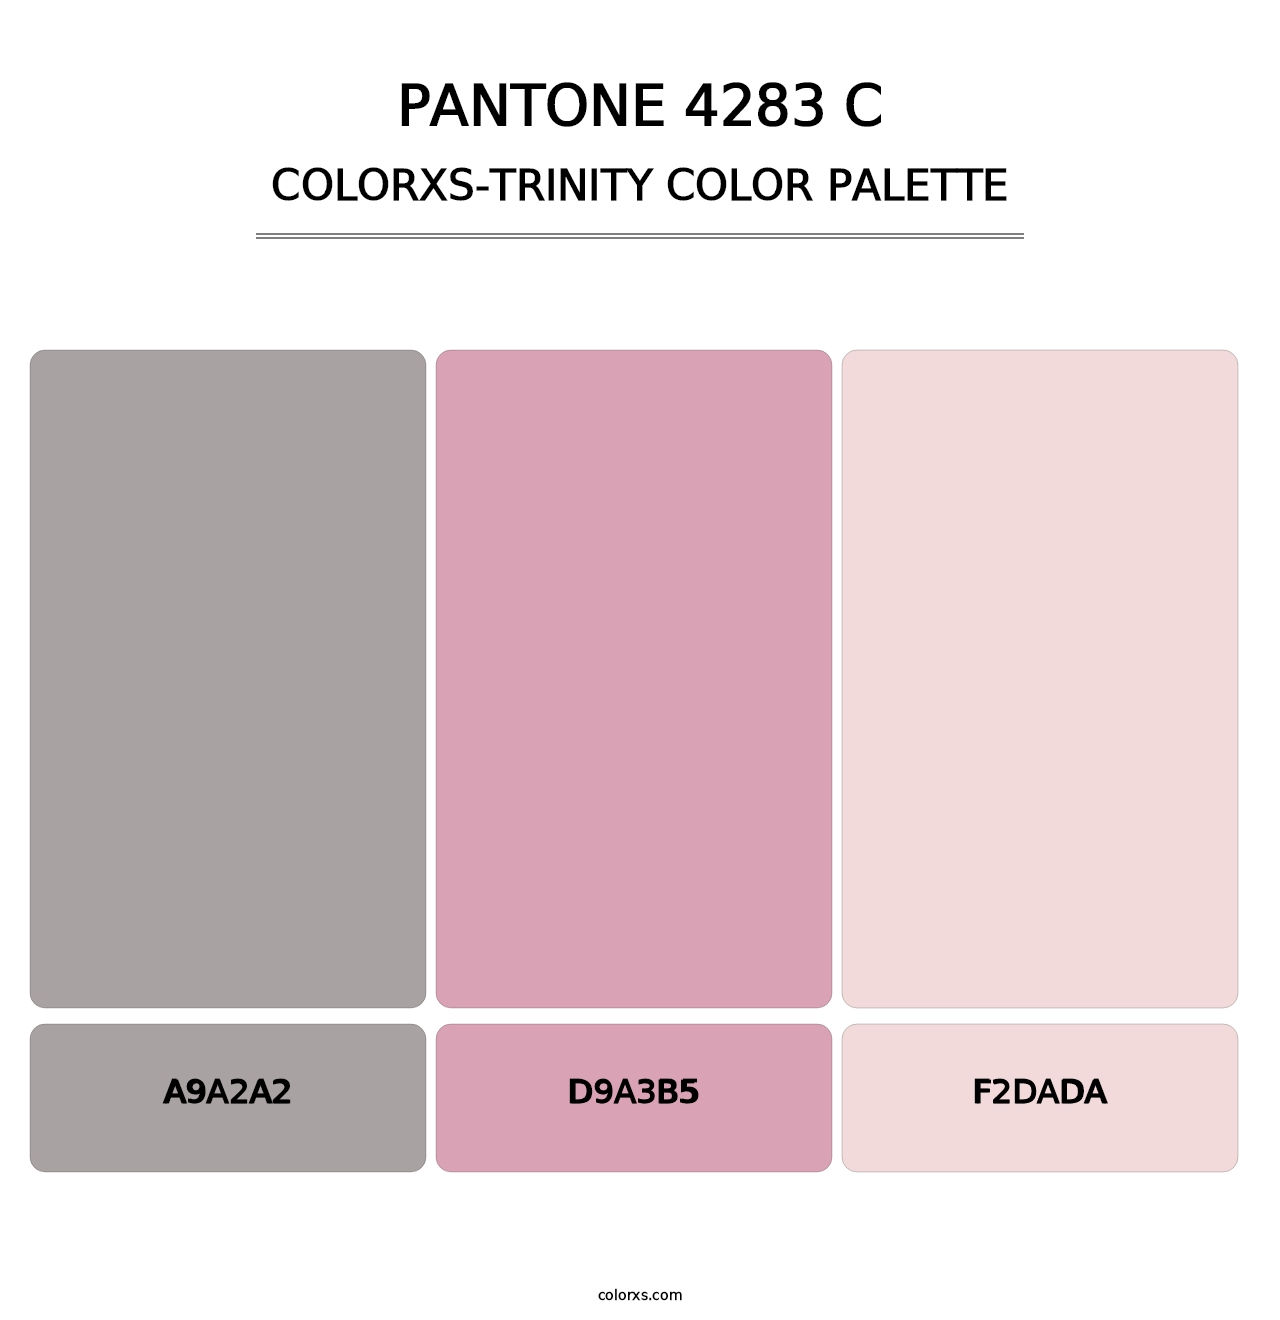 PANTONE 4283 C - Colorxs Trinity Palette